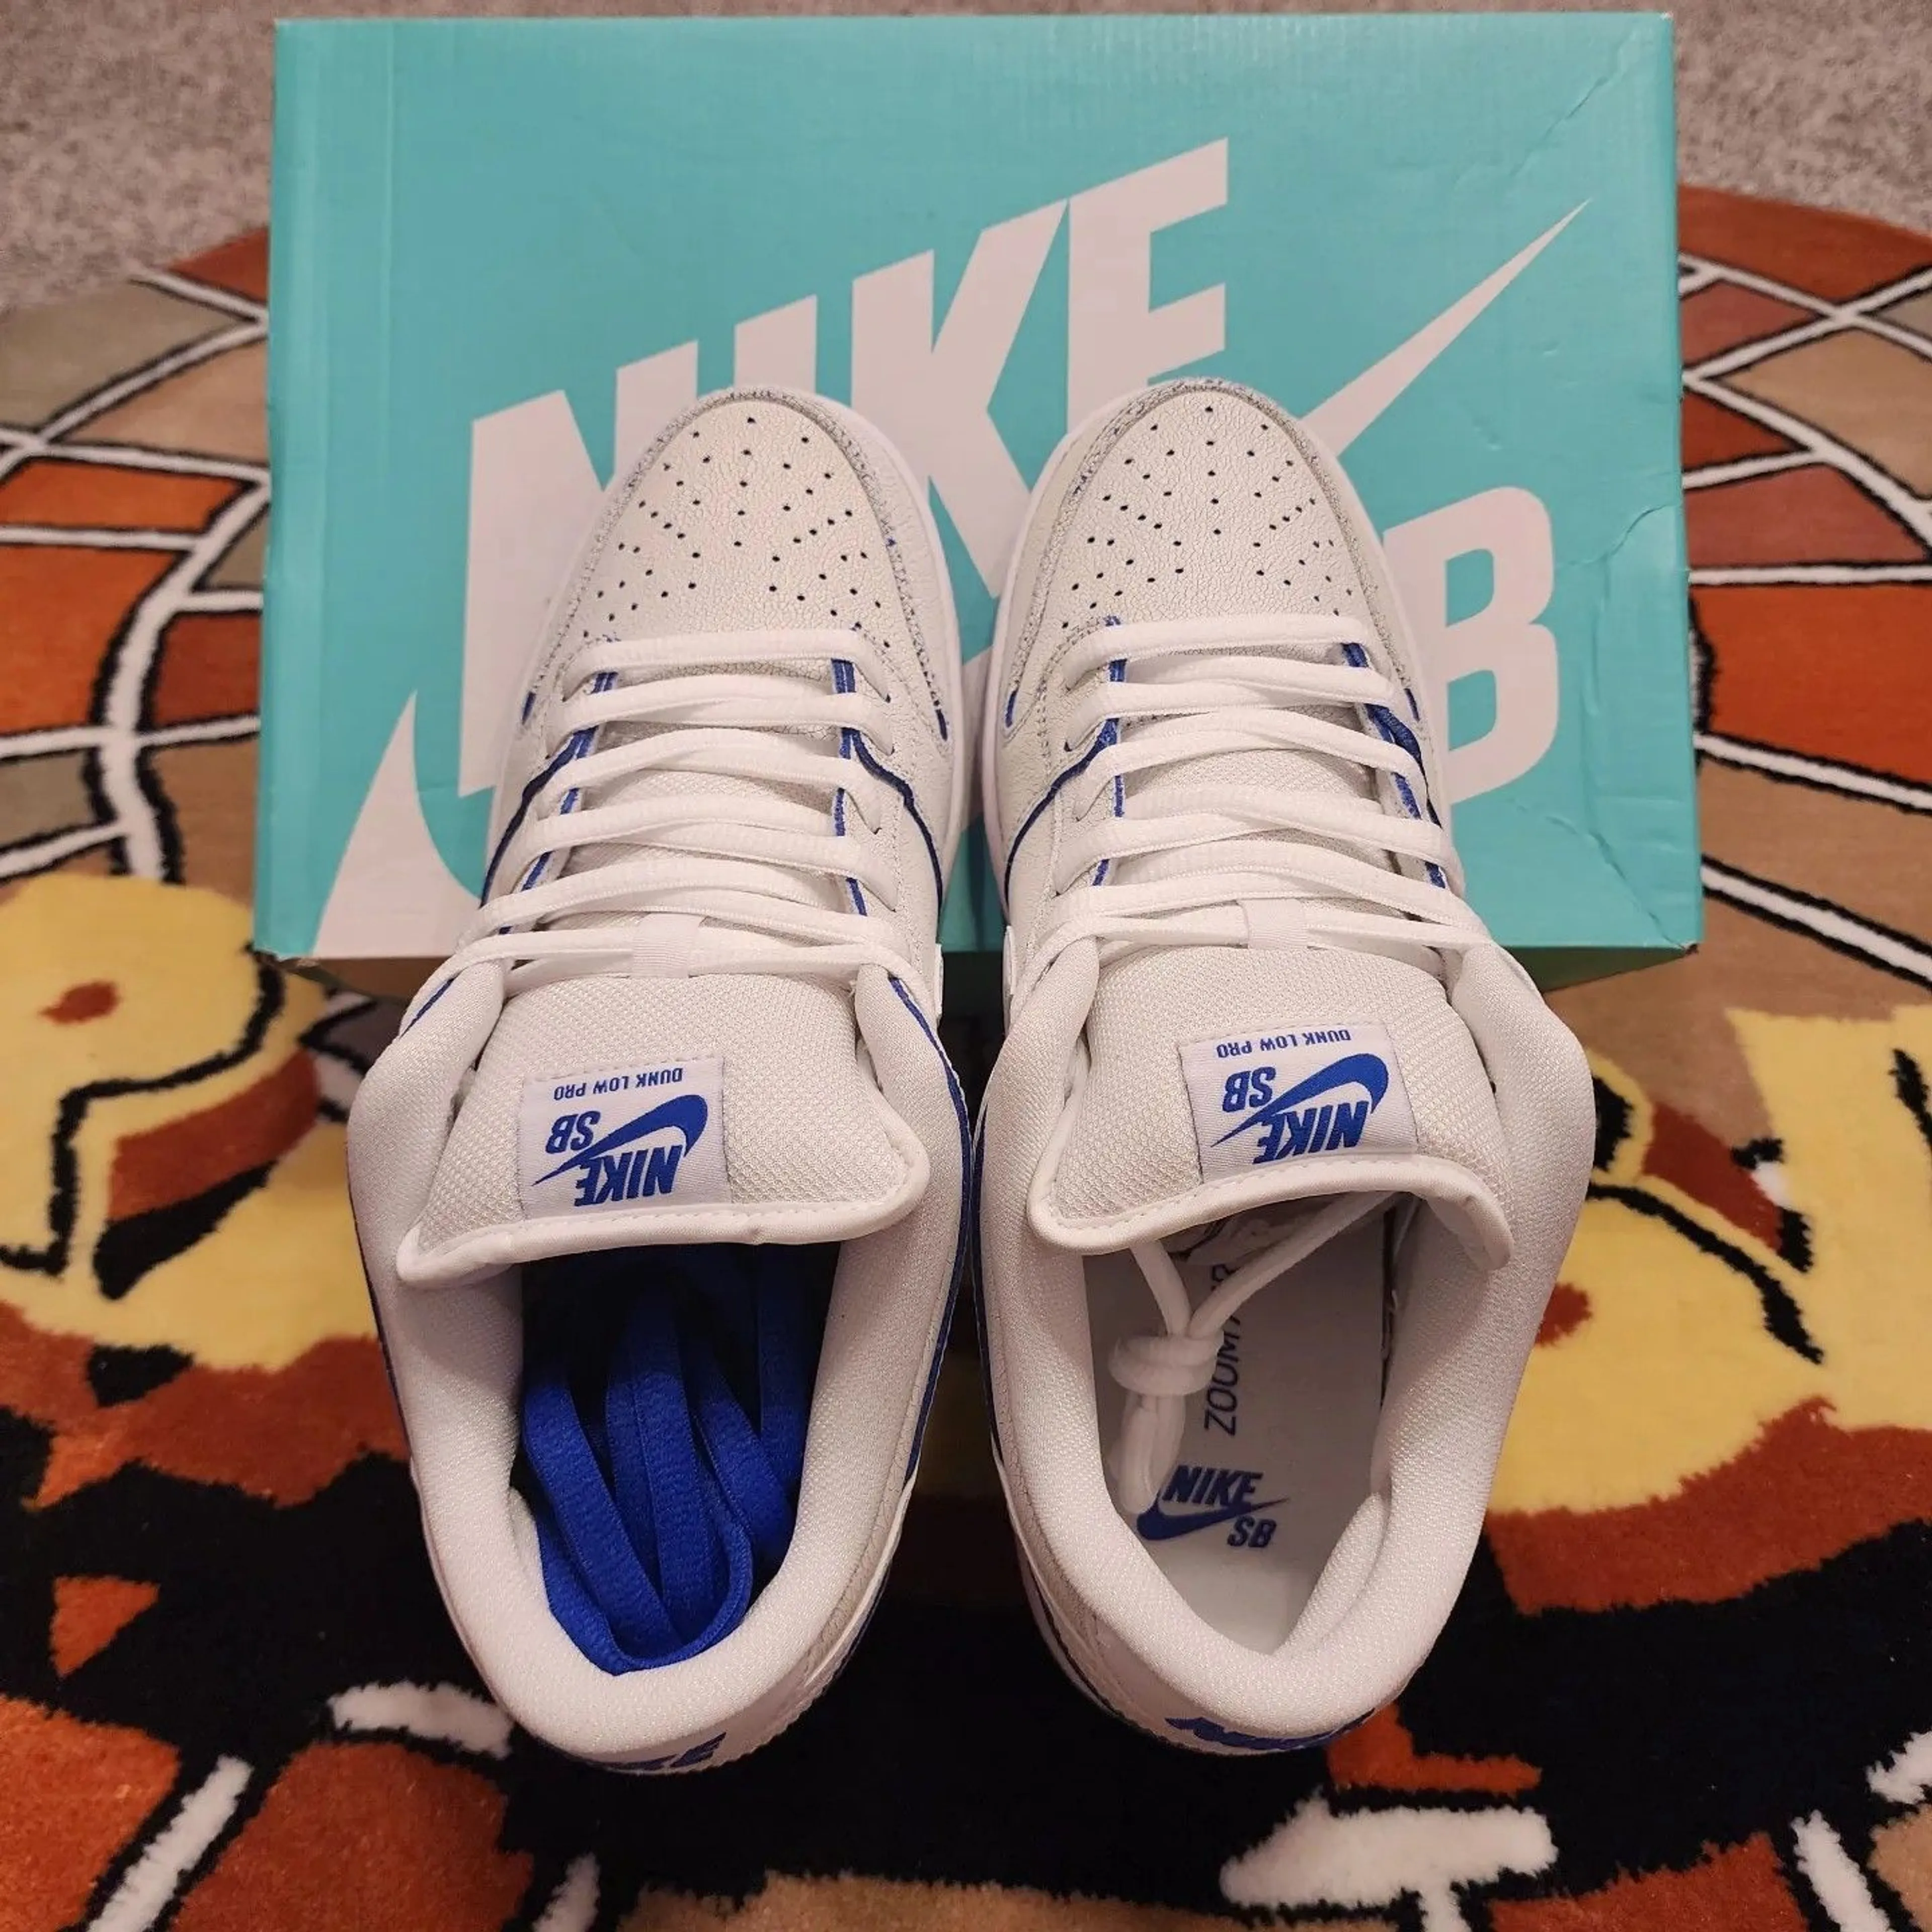 Nike SB DUNK LOW Premium - Cracked Leather Blue (2019) Men's Size 9.5 CJ6884 -100 · Whatnot: Buy